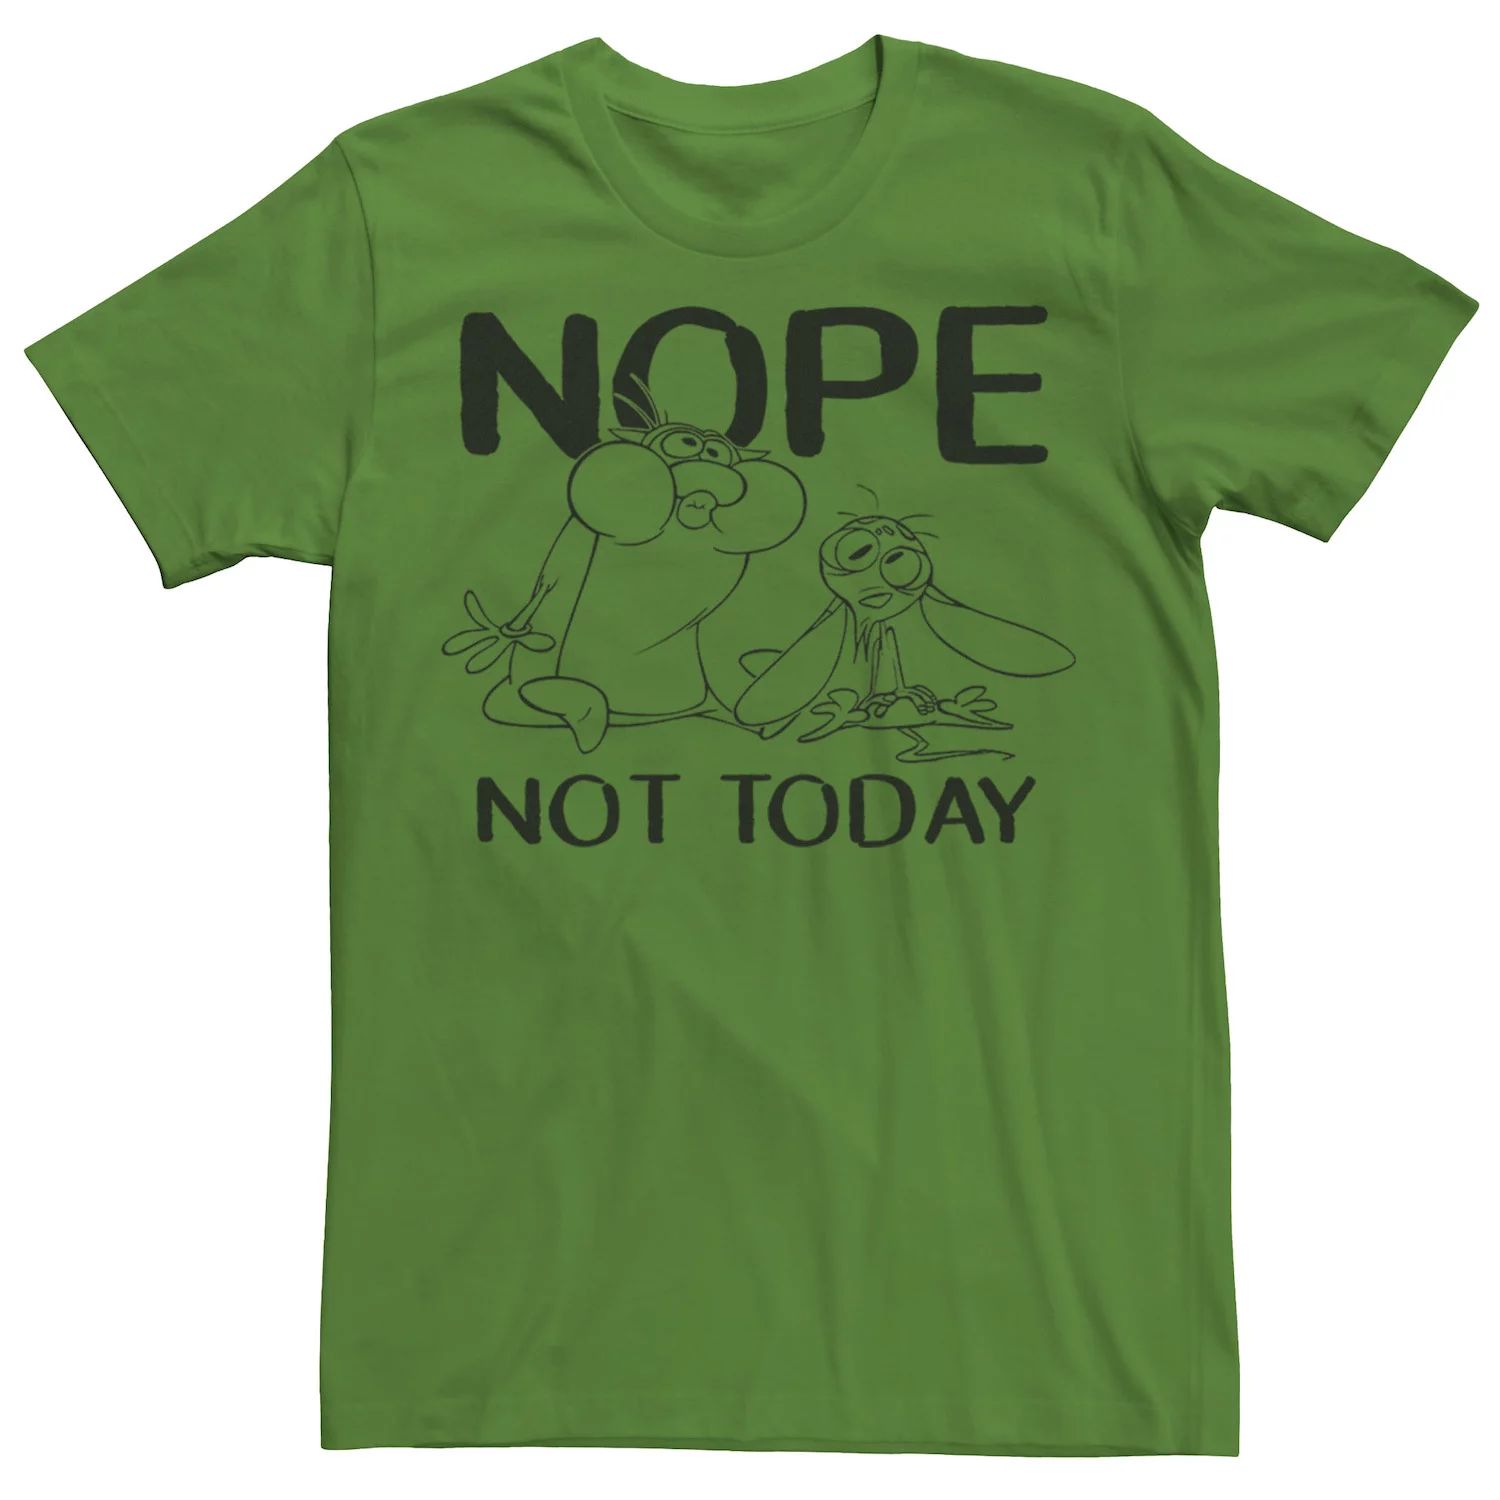 Мужская футболка Ren & Stimpy Nope Not Today с эскизом Nickelodeon kelly